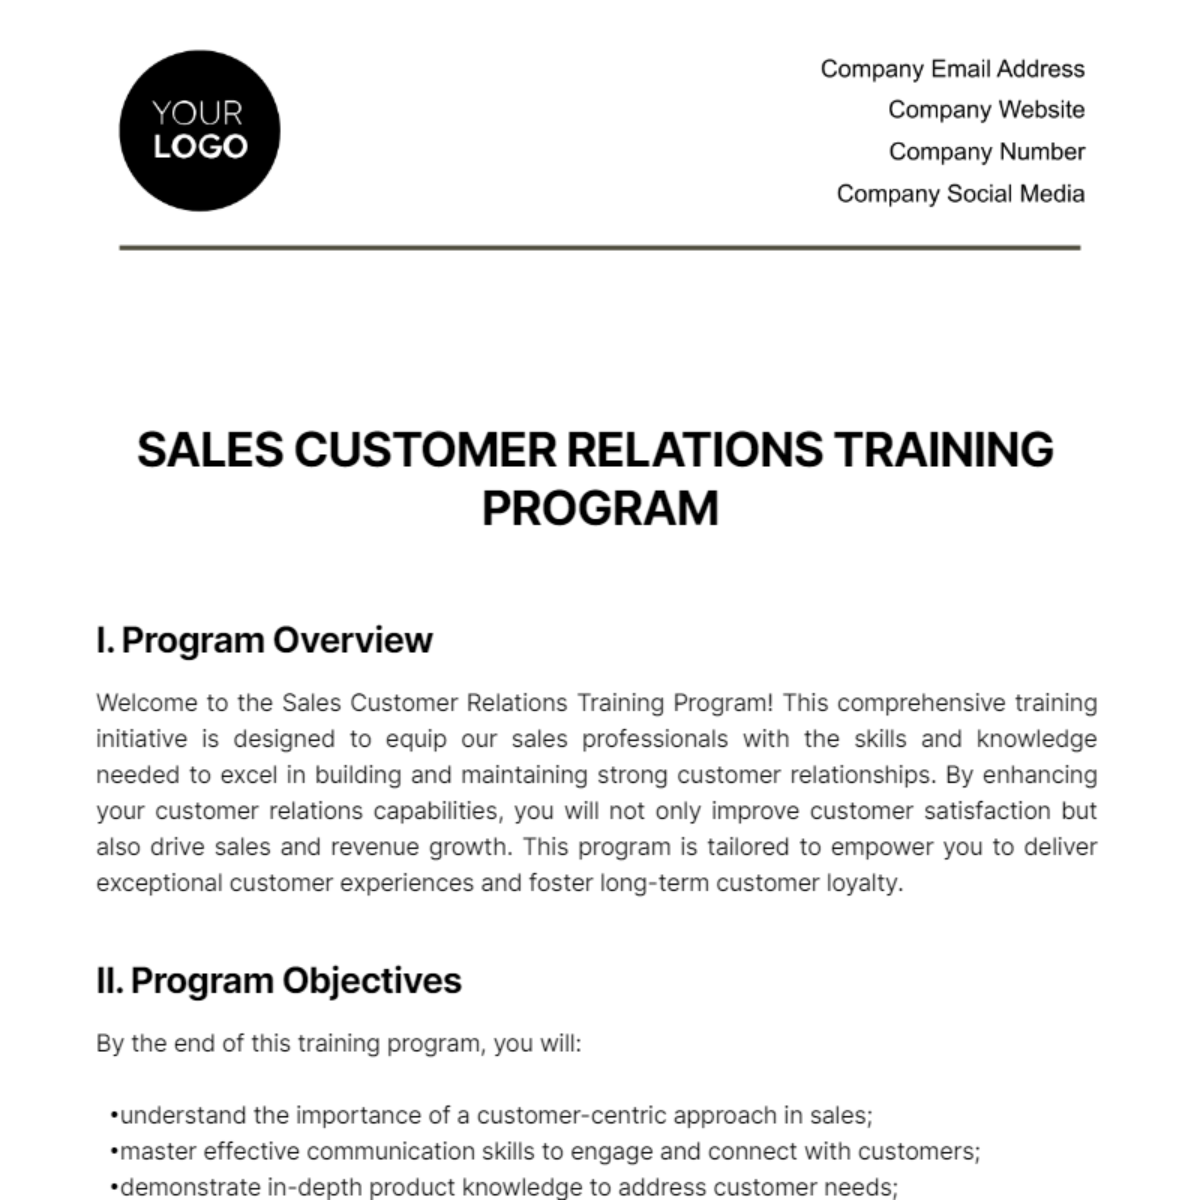 Free Sales Customer Relations Training Program Template